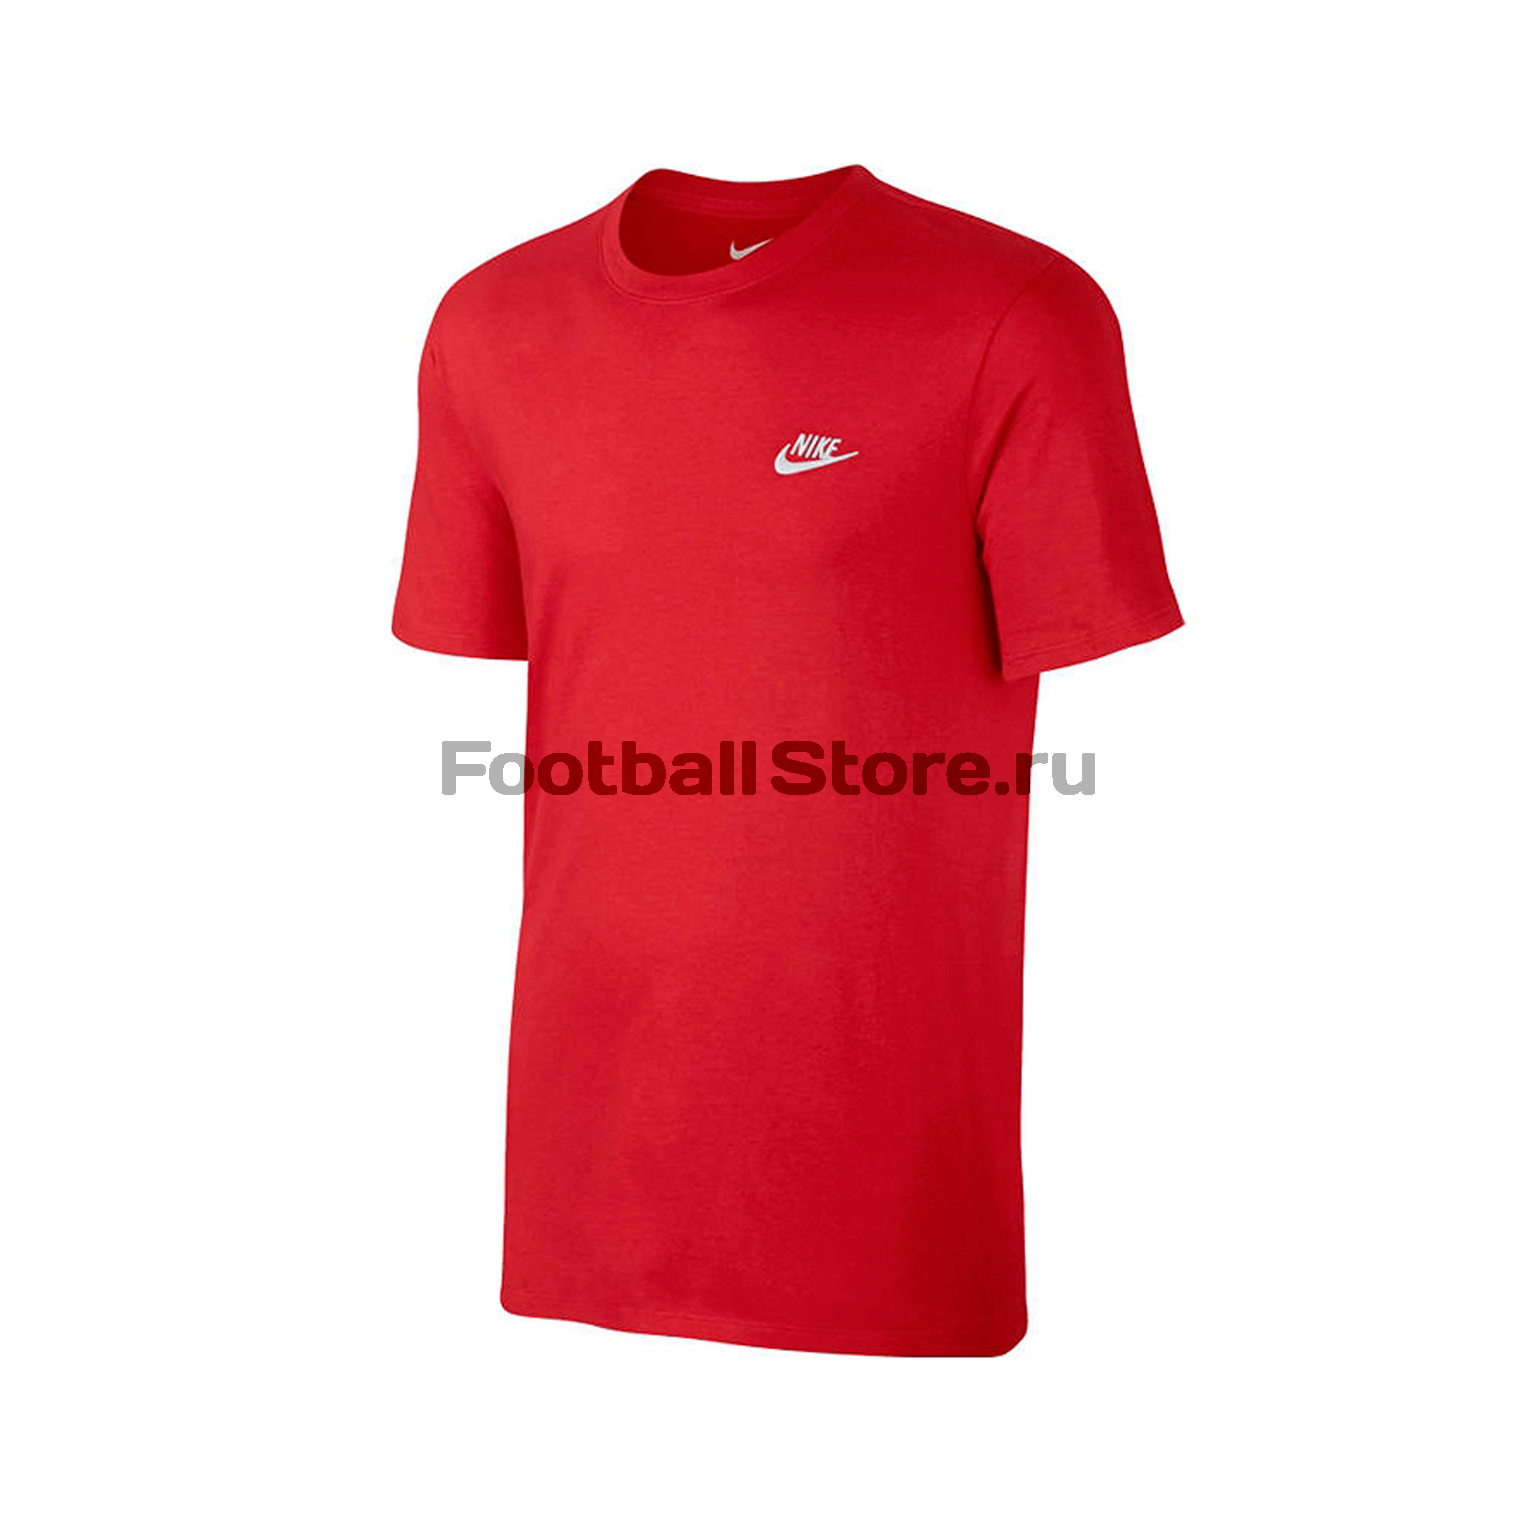 Футболка тренировочная Nike Tee Club Embrd Ftra 827021-659